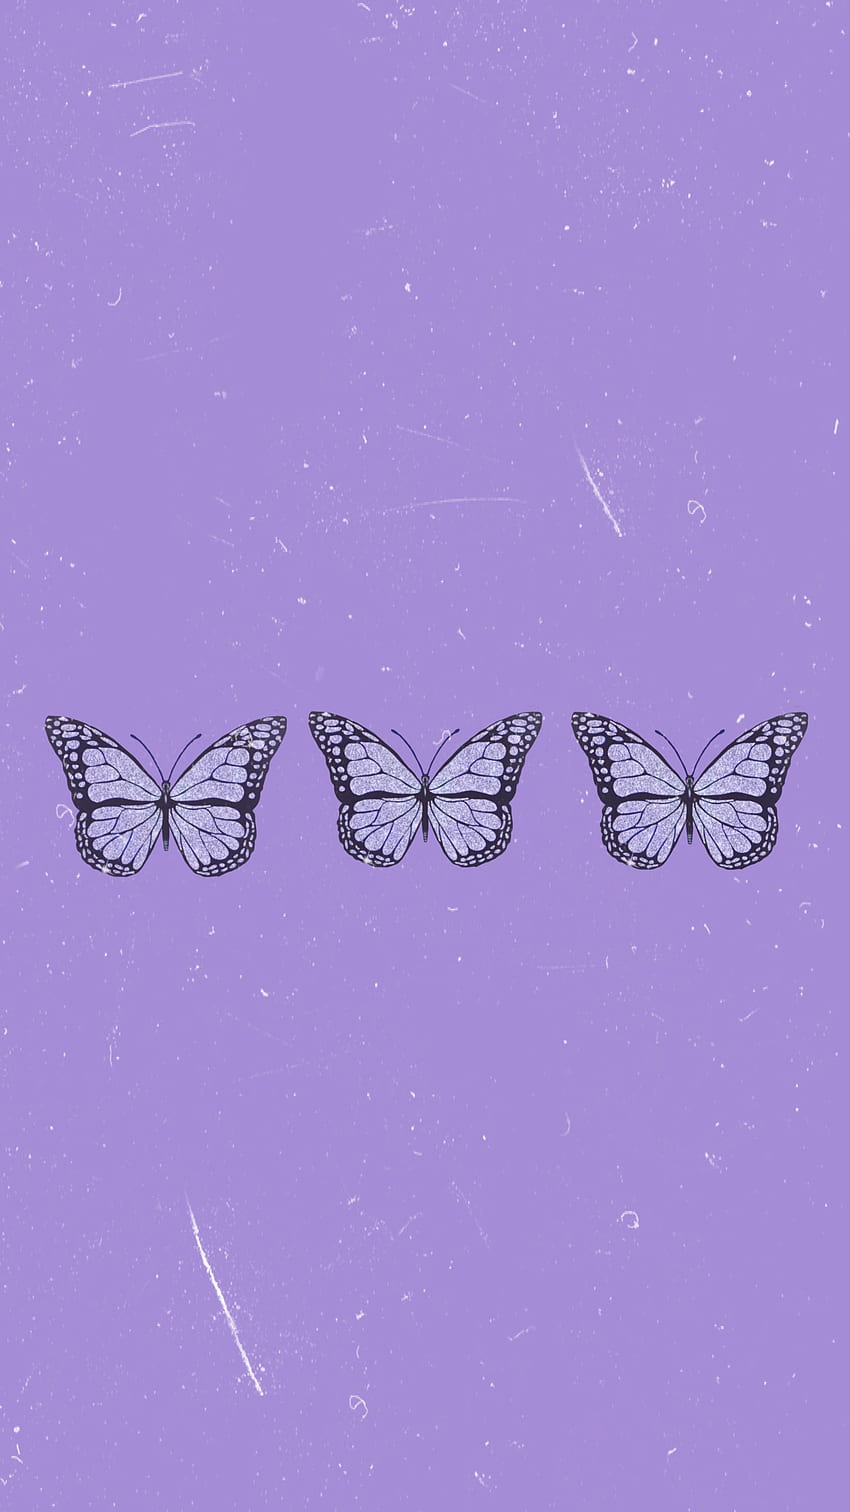 Three butterflies on a purple background - Butterfly